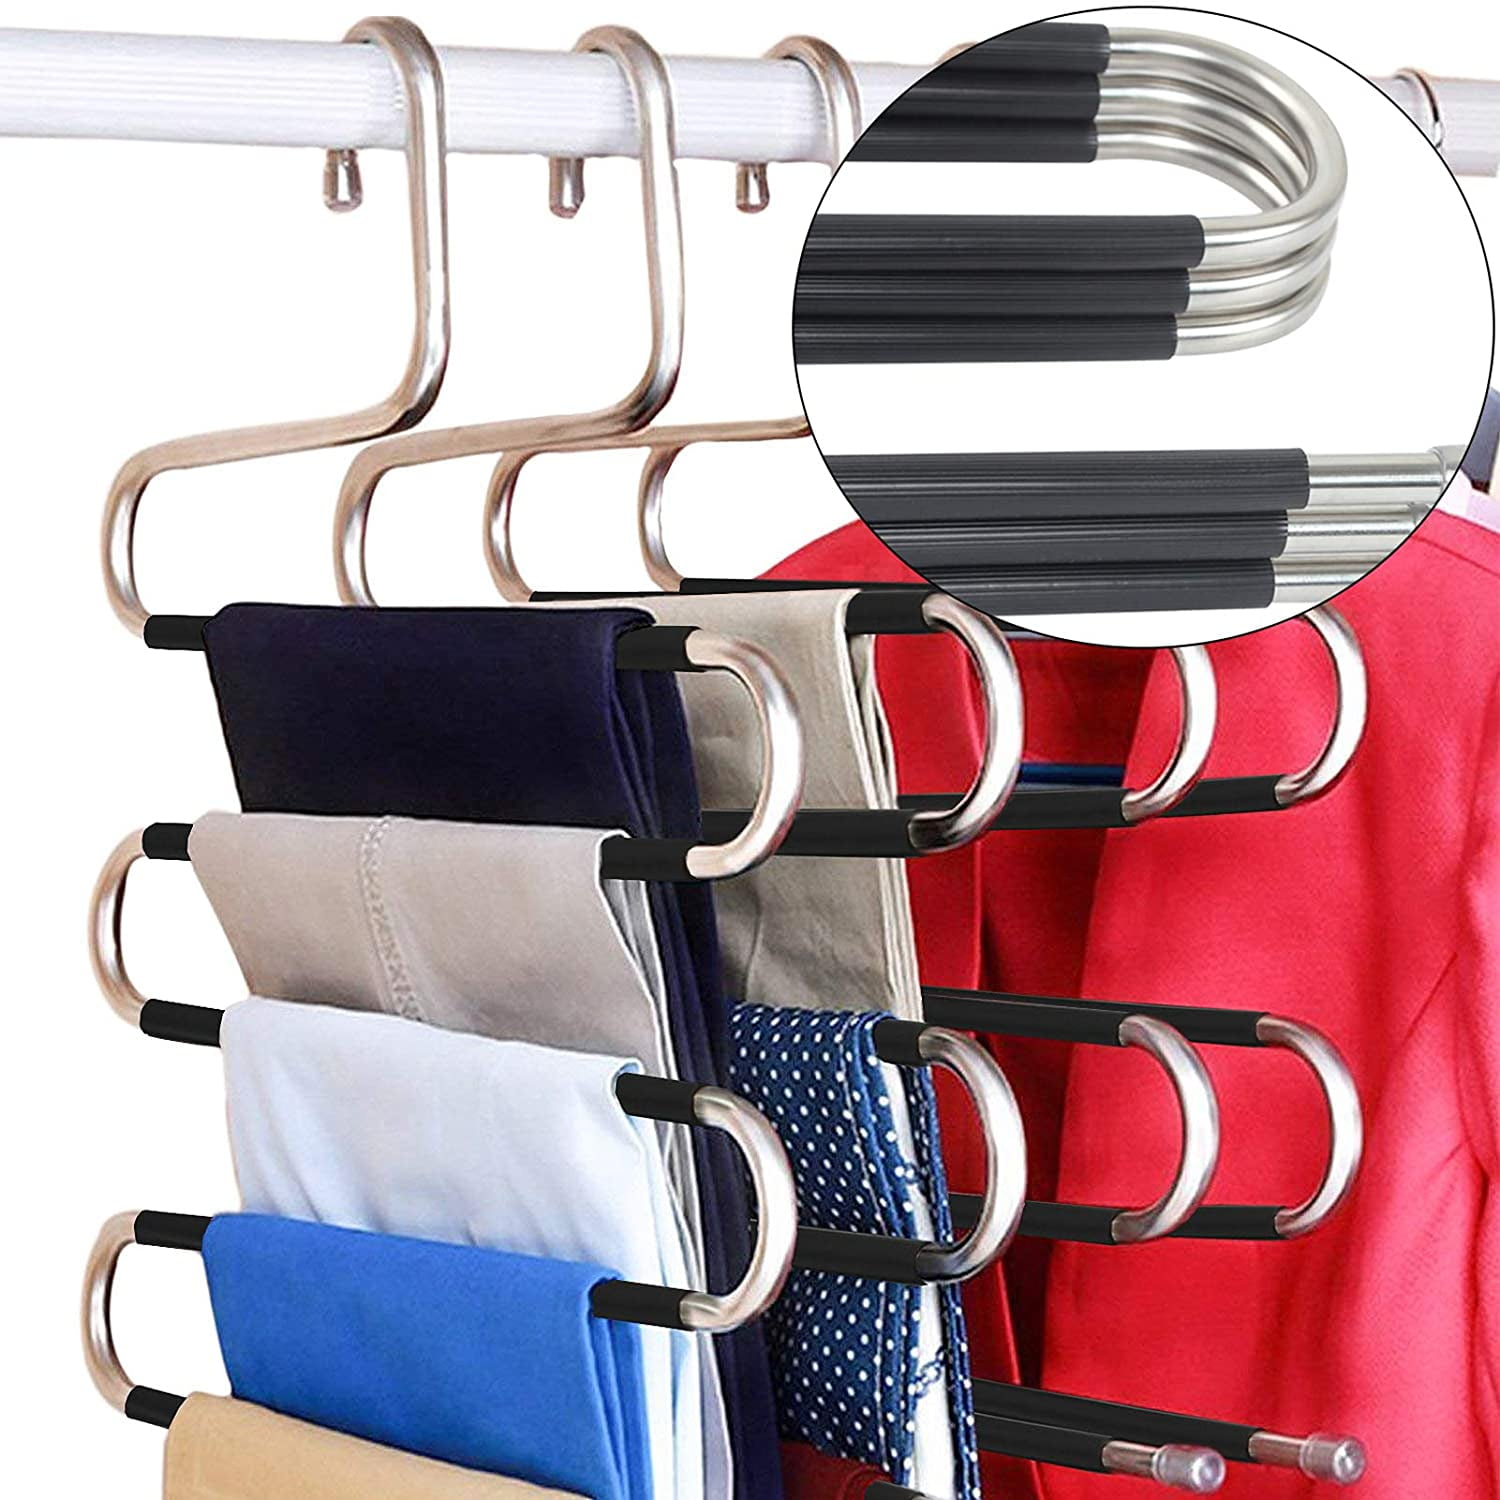 Yuehuam Pants Hanging Rack,Multi-Function Folding Stainless Steel Pants Hanger Jeans Organizer Space Saving Clothes Hanging Storage Rack